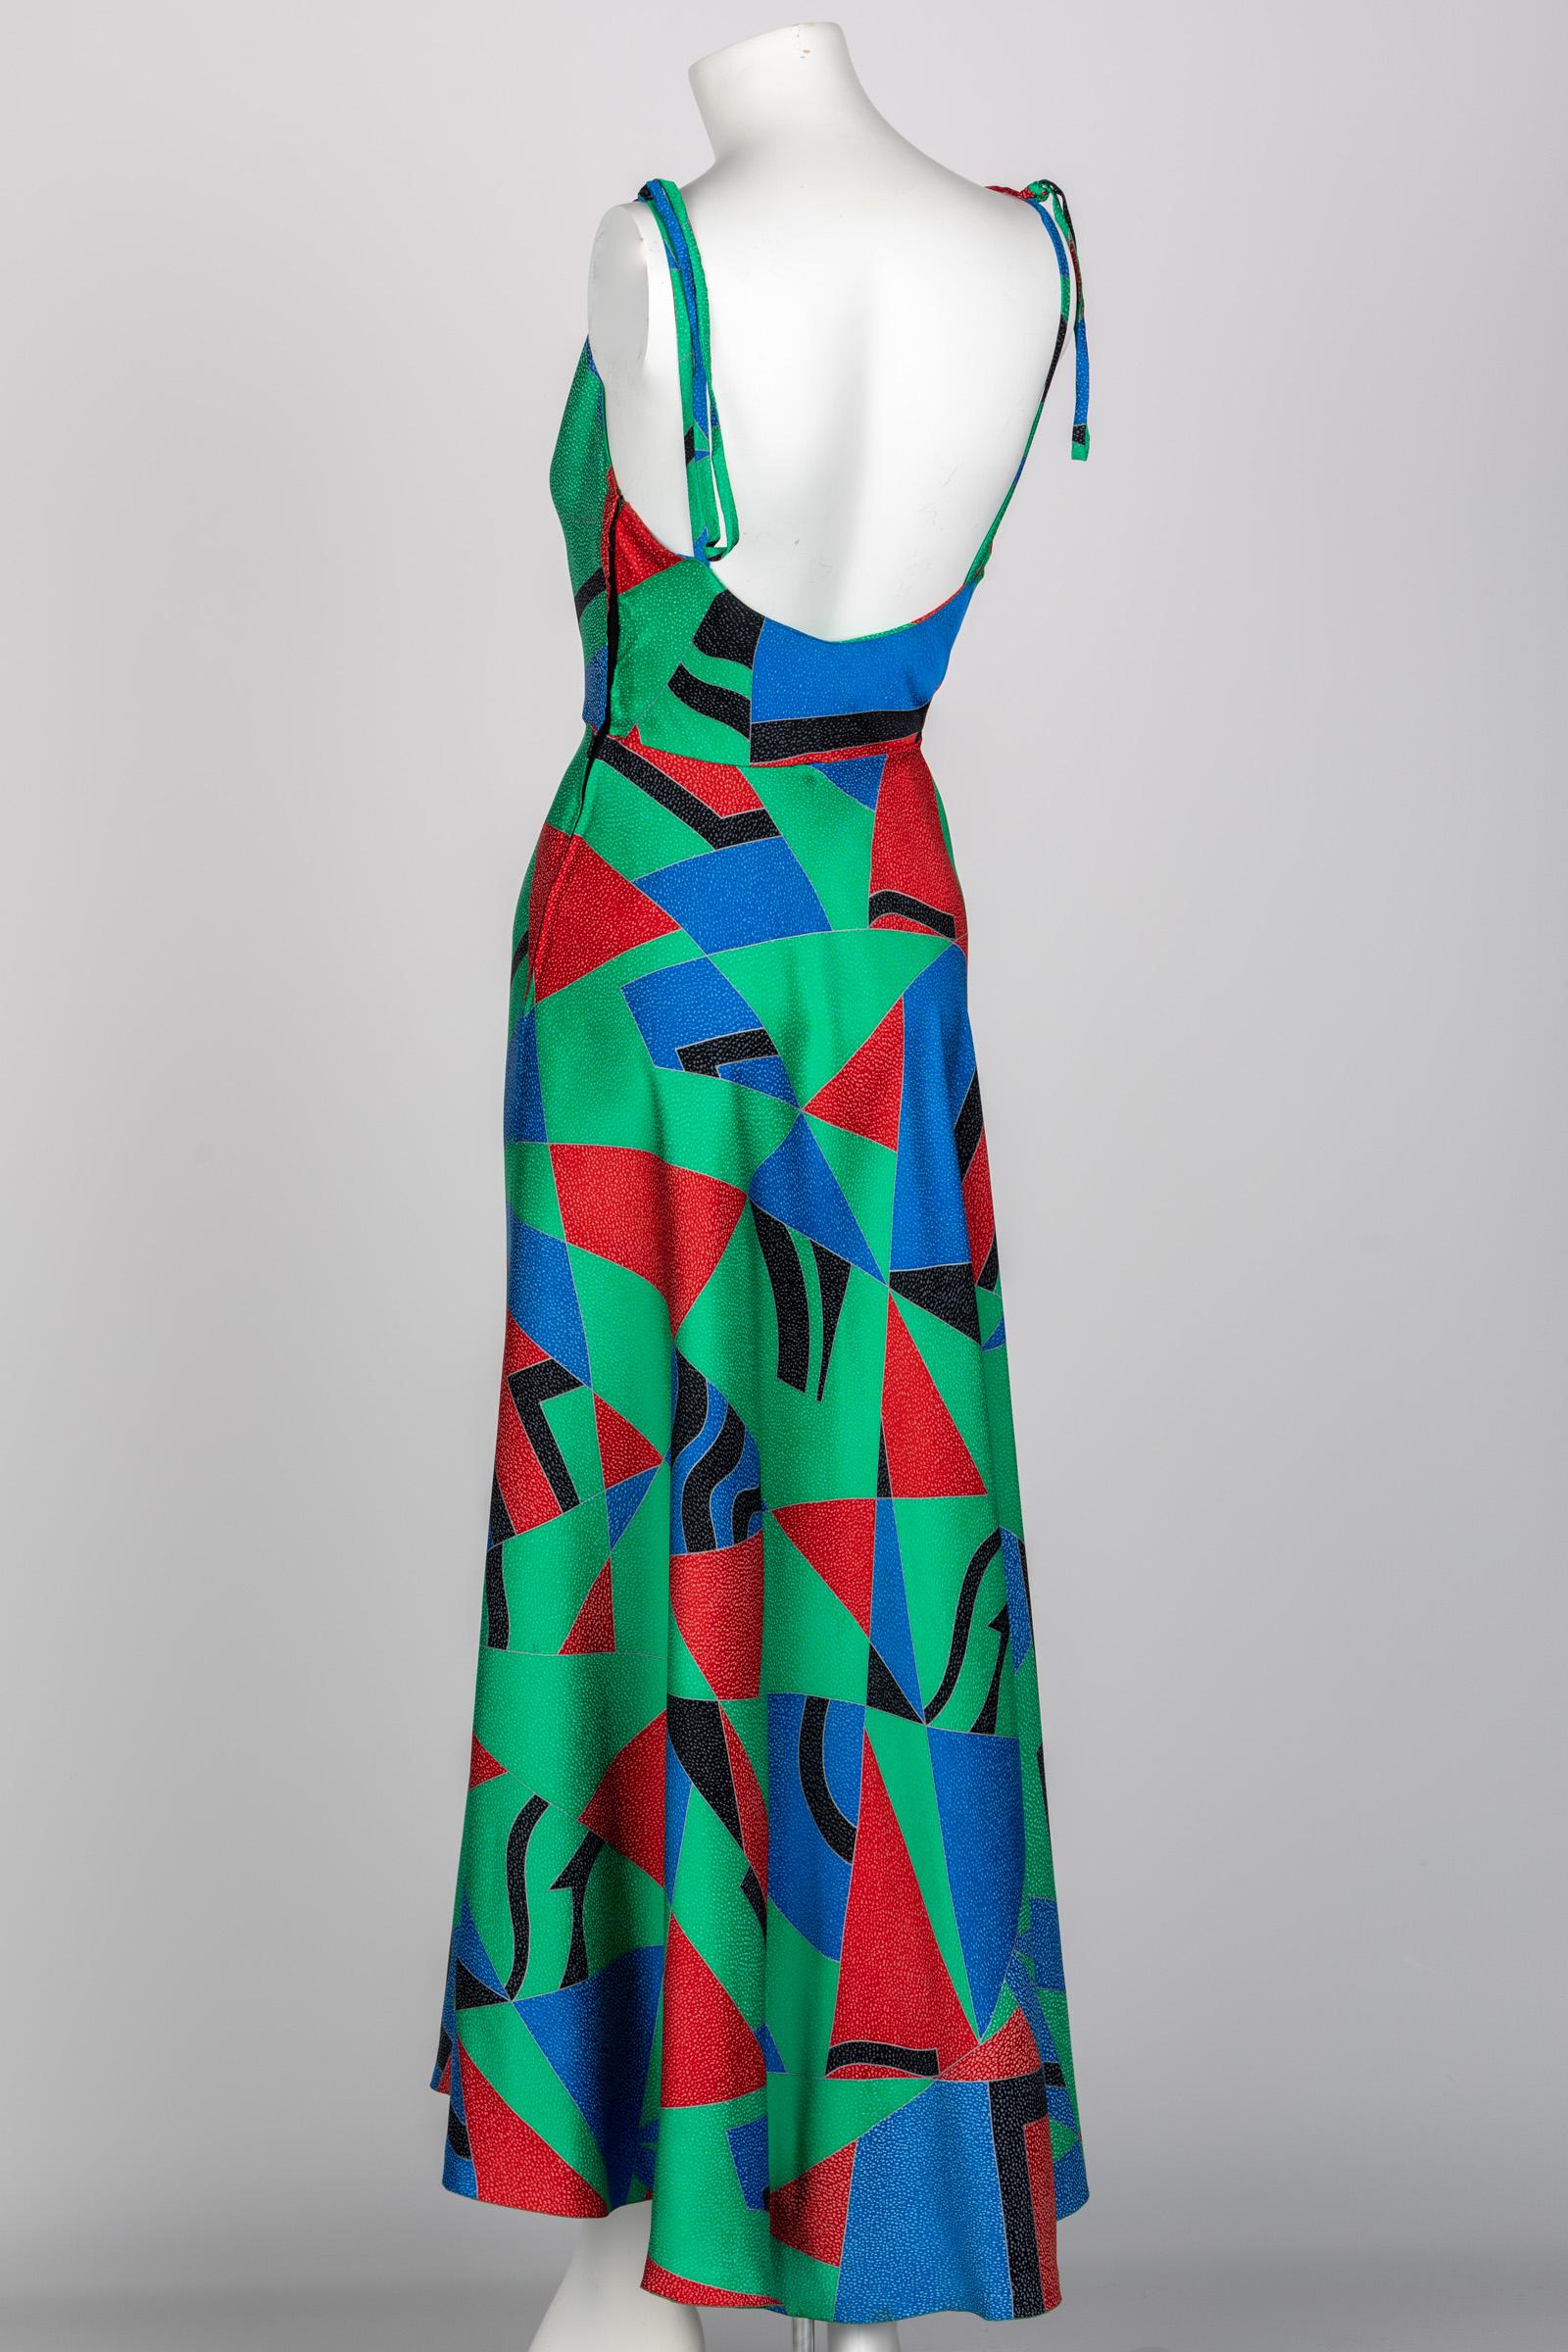 Women's Chloe Karl Lagerfeld Cubist Green Silk Print Sleeveless Dress, 1970s For Sale